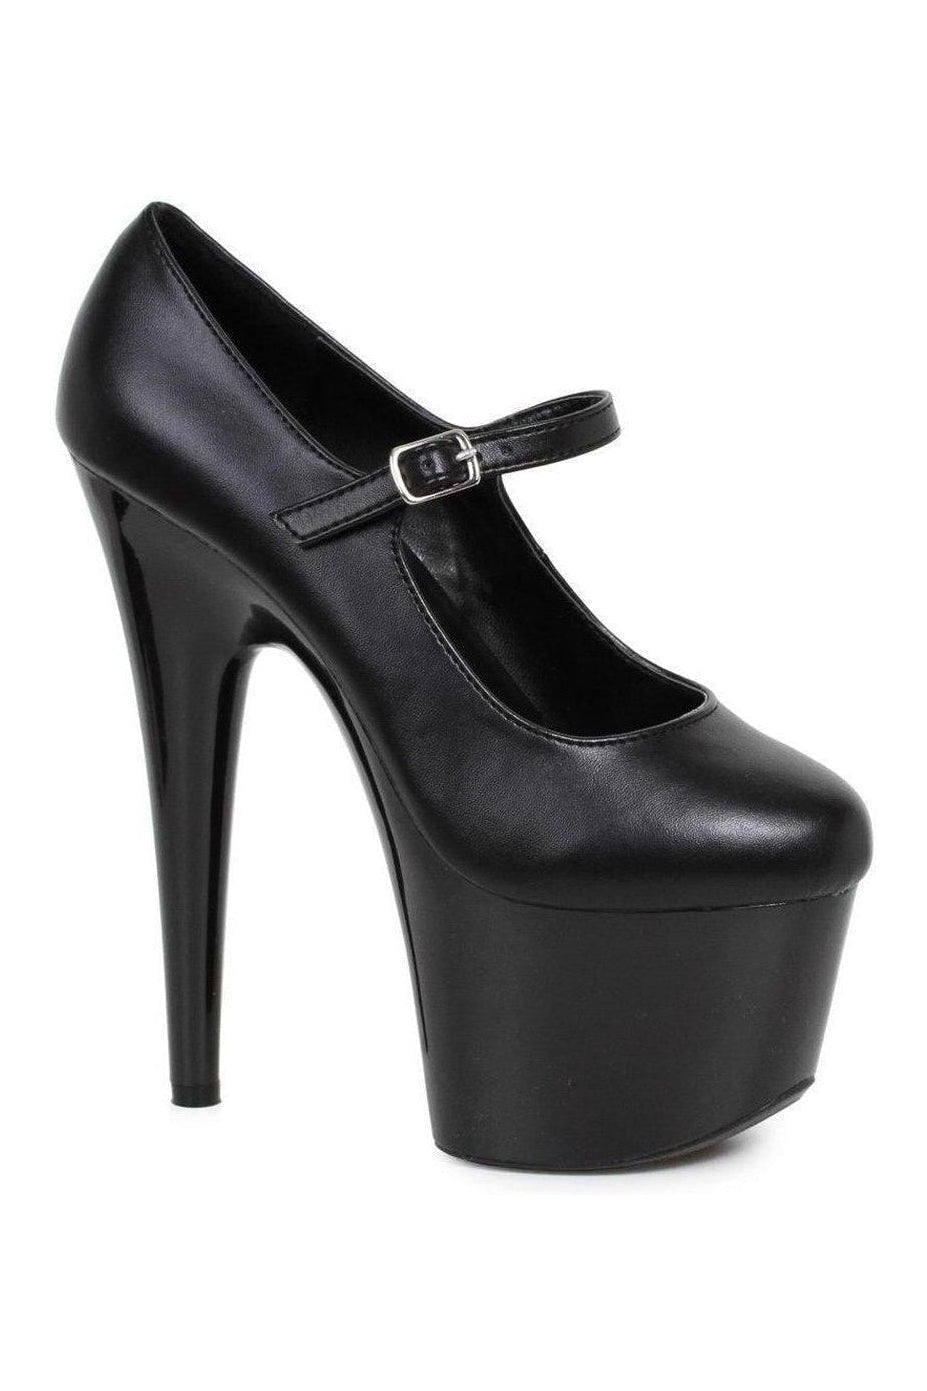 Ellie Shoes Black Mary Janes Platform Stripper Shoes | Buy at Sexyshoes.com